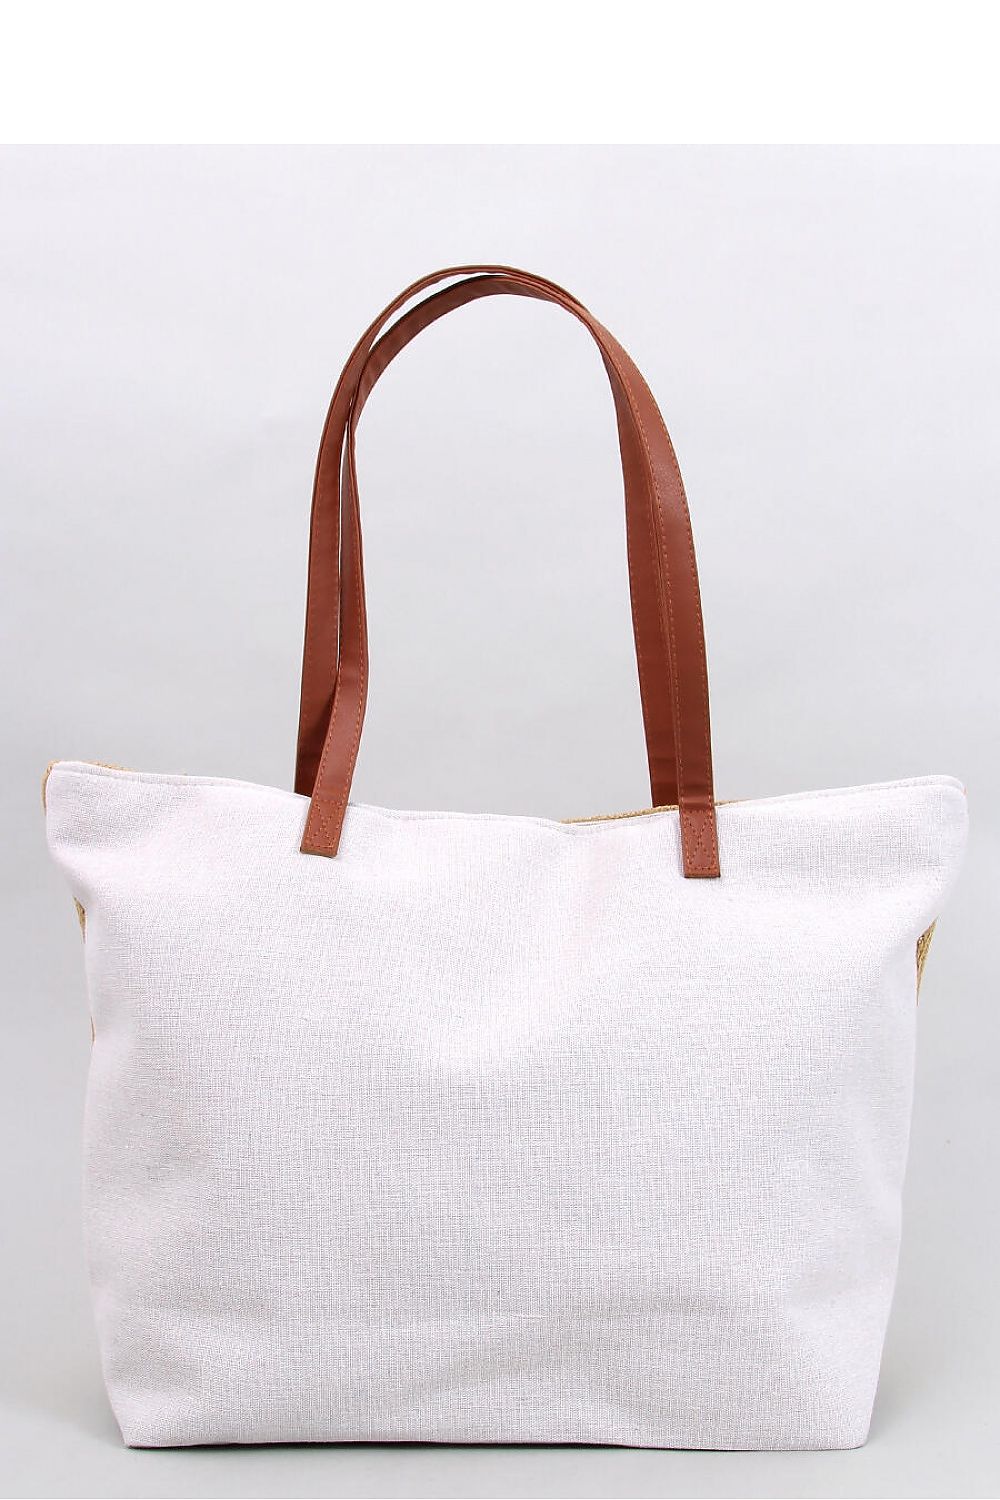 Tan and White Beach Bag by Inello